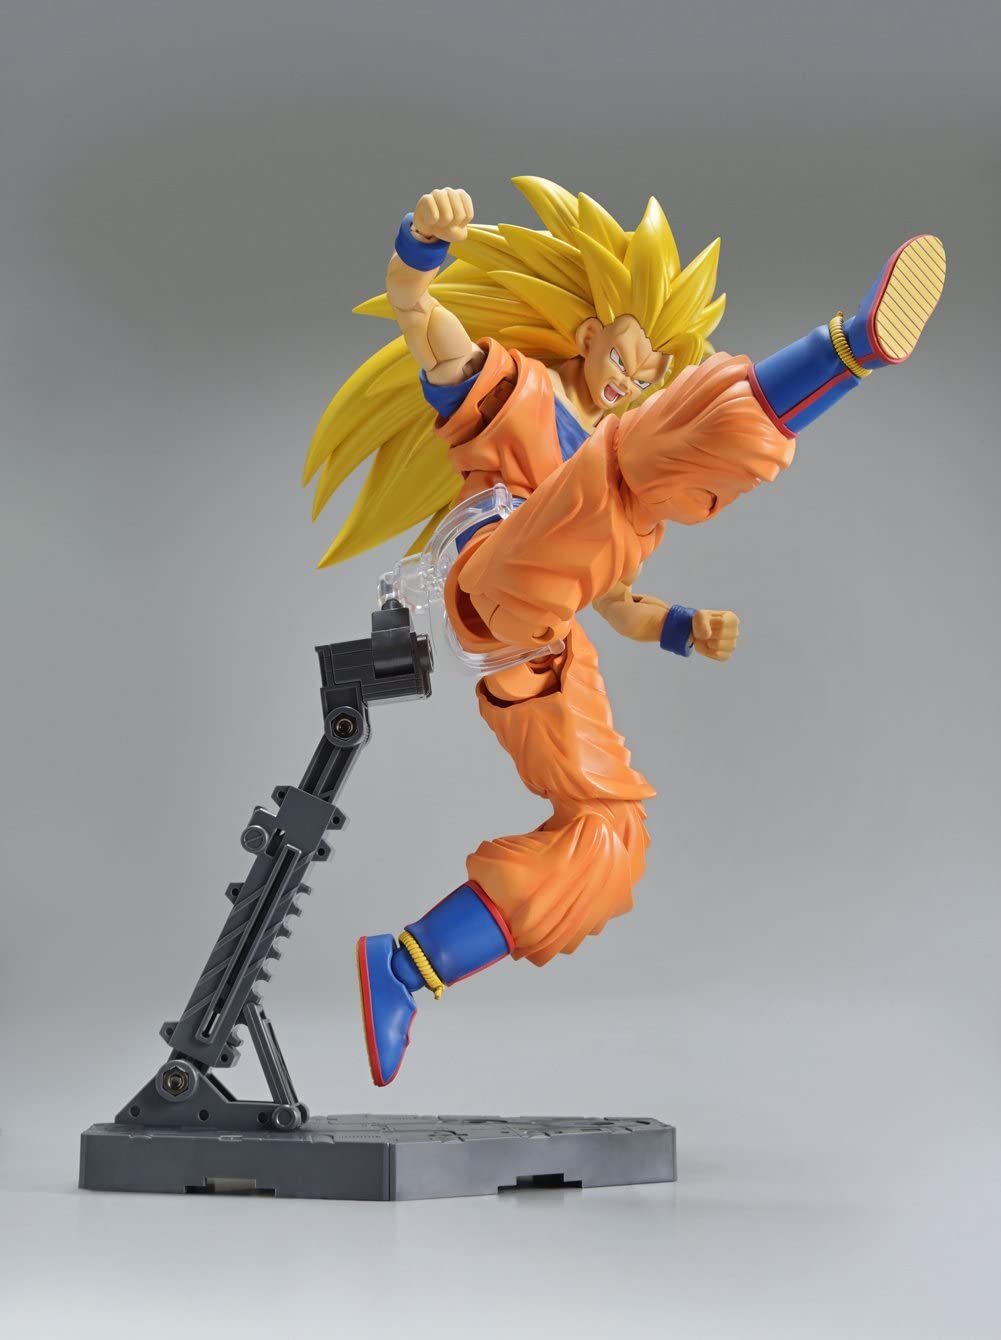 Super Saiyan 4 Goku Bandai Figure-Rise